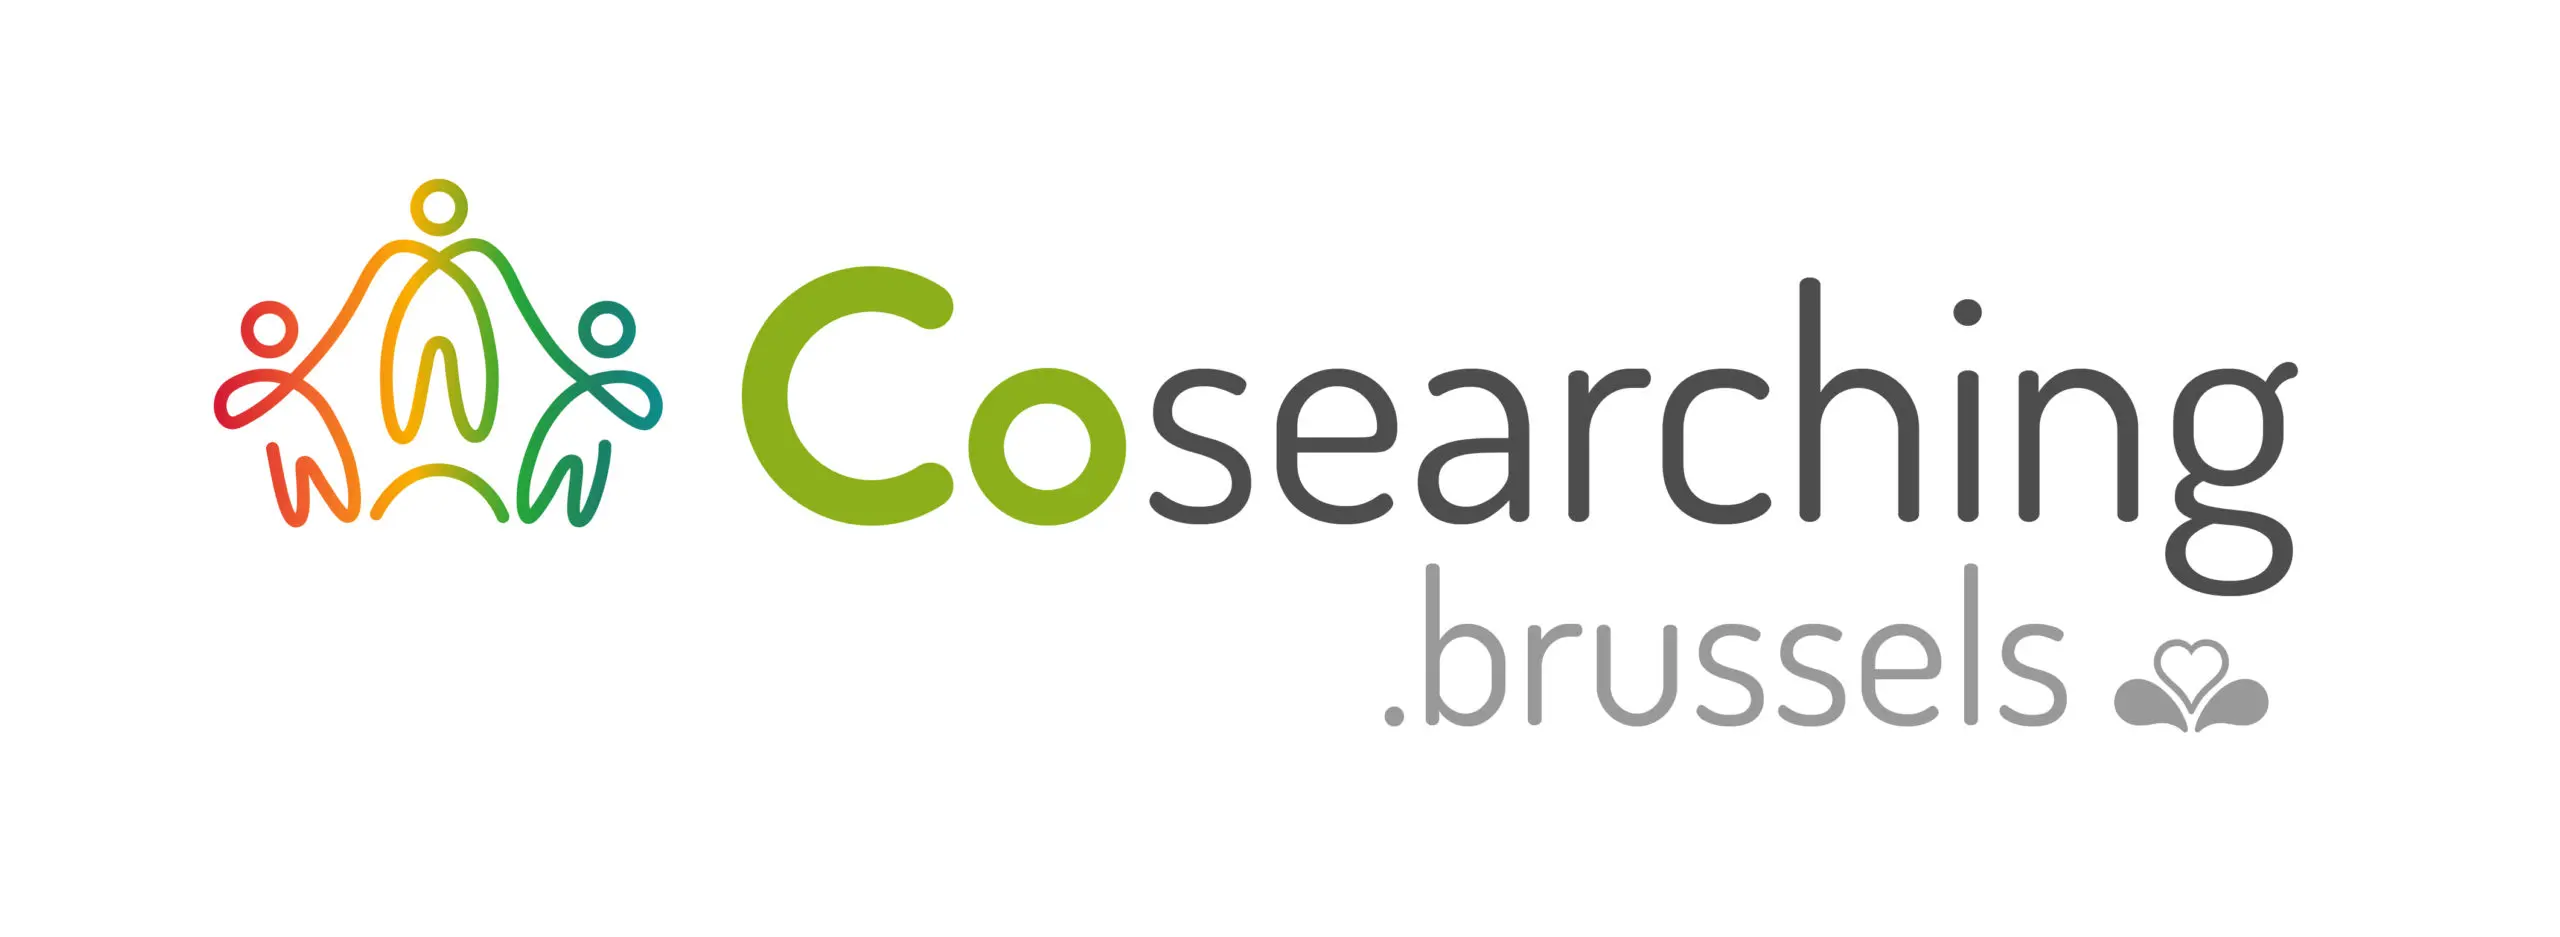 Eerste Cosearching Center in Brussels